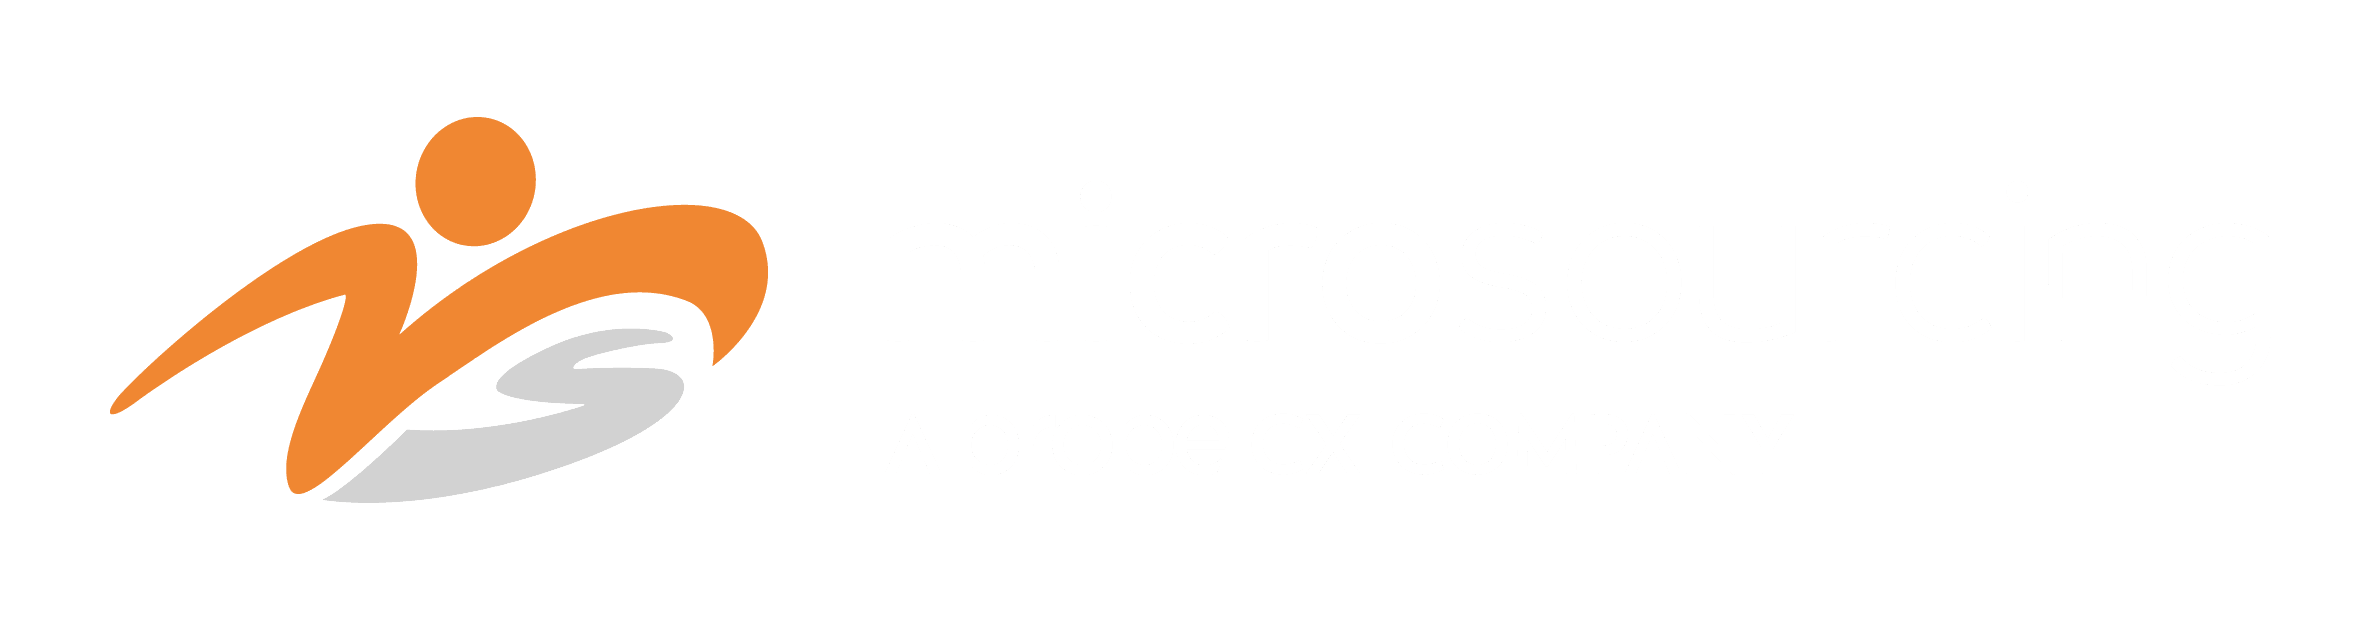 MicroSourcing Logo - Landscape (RGB) Rev